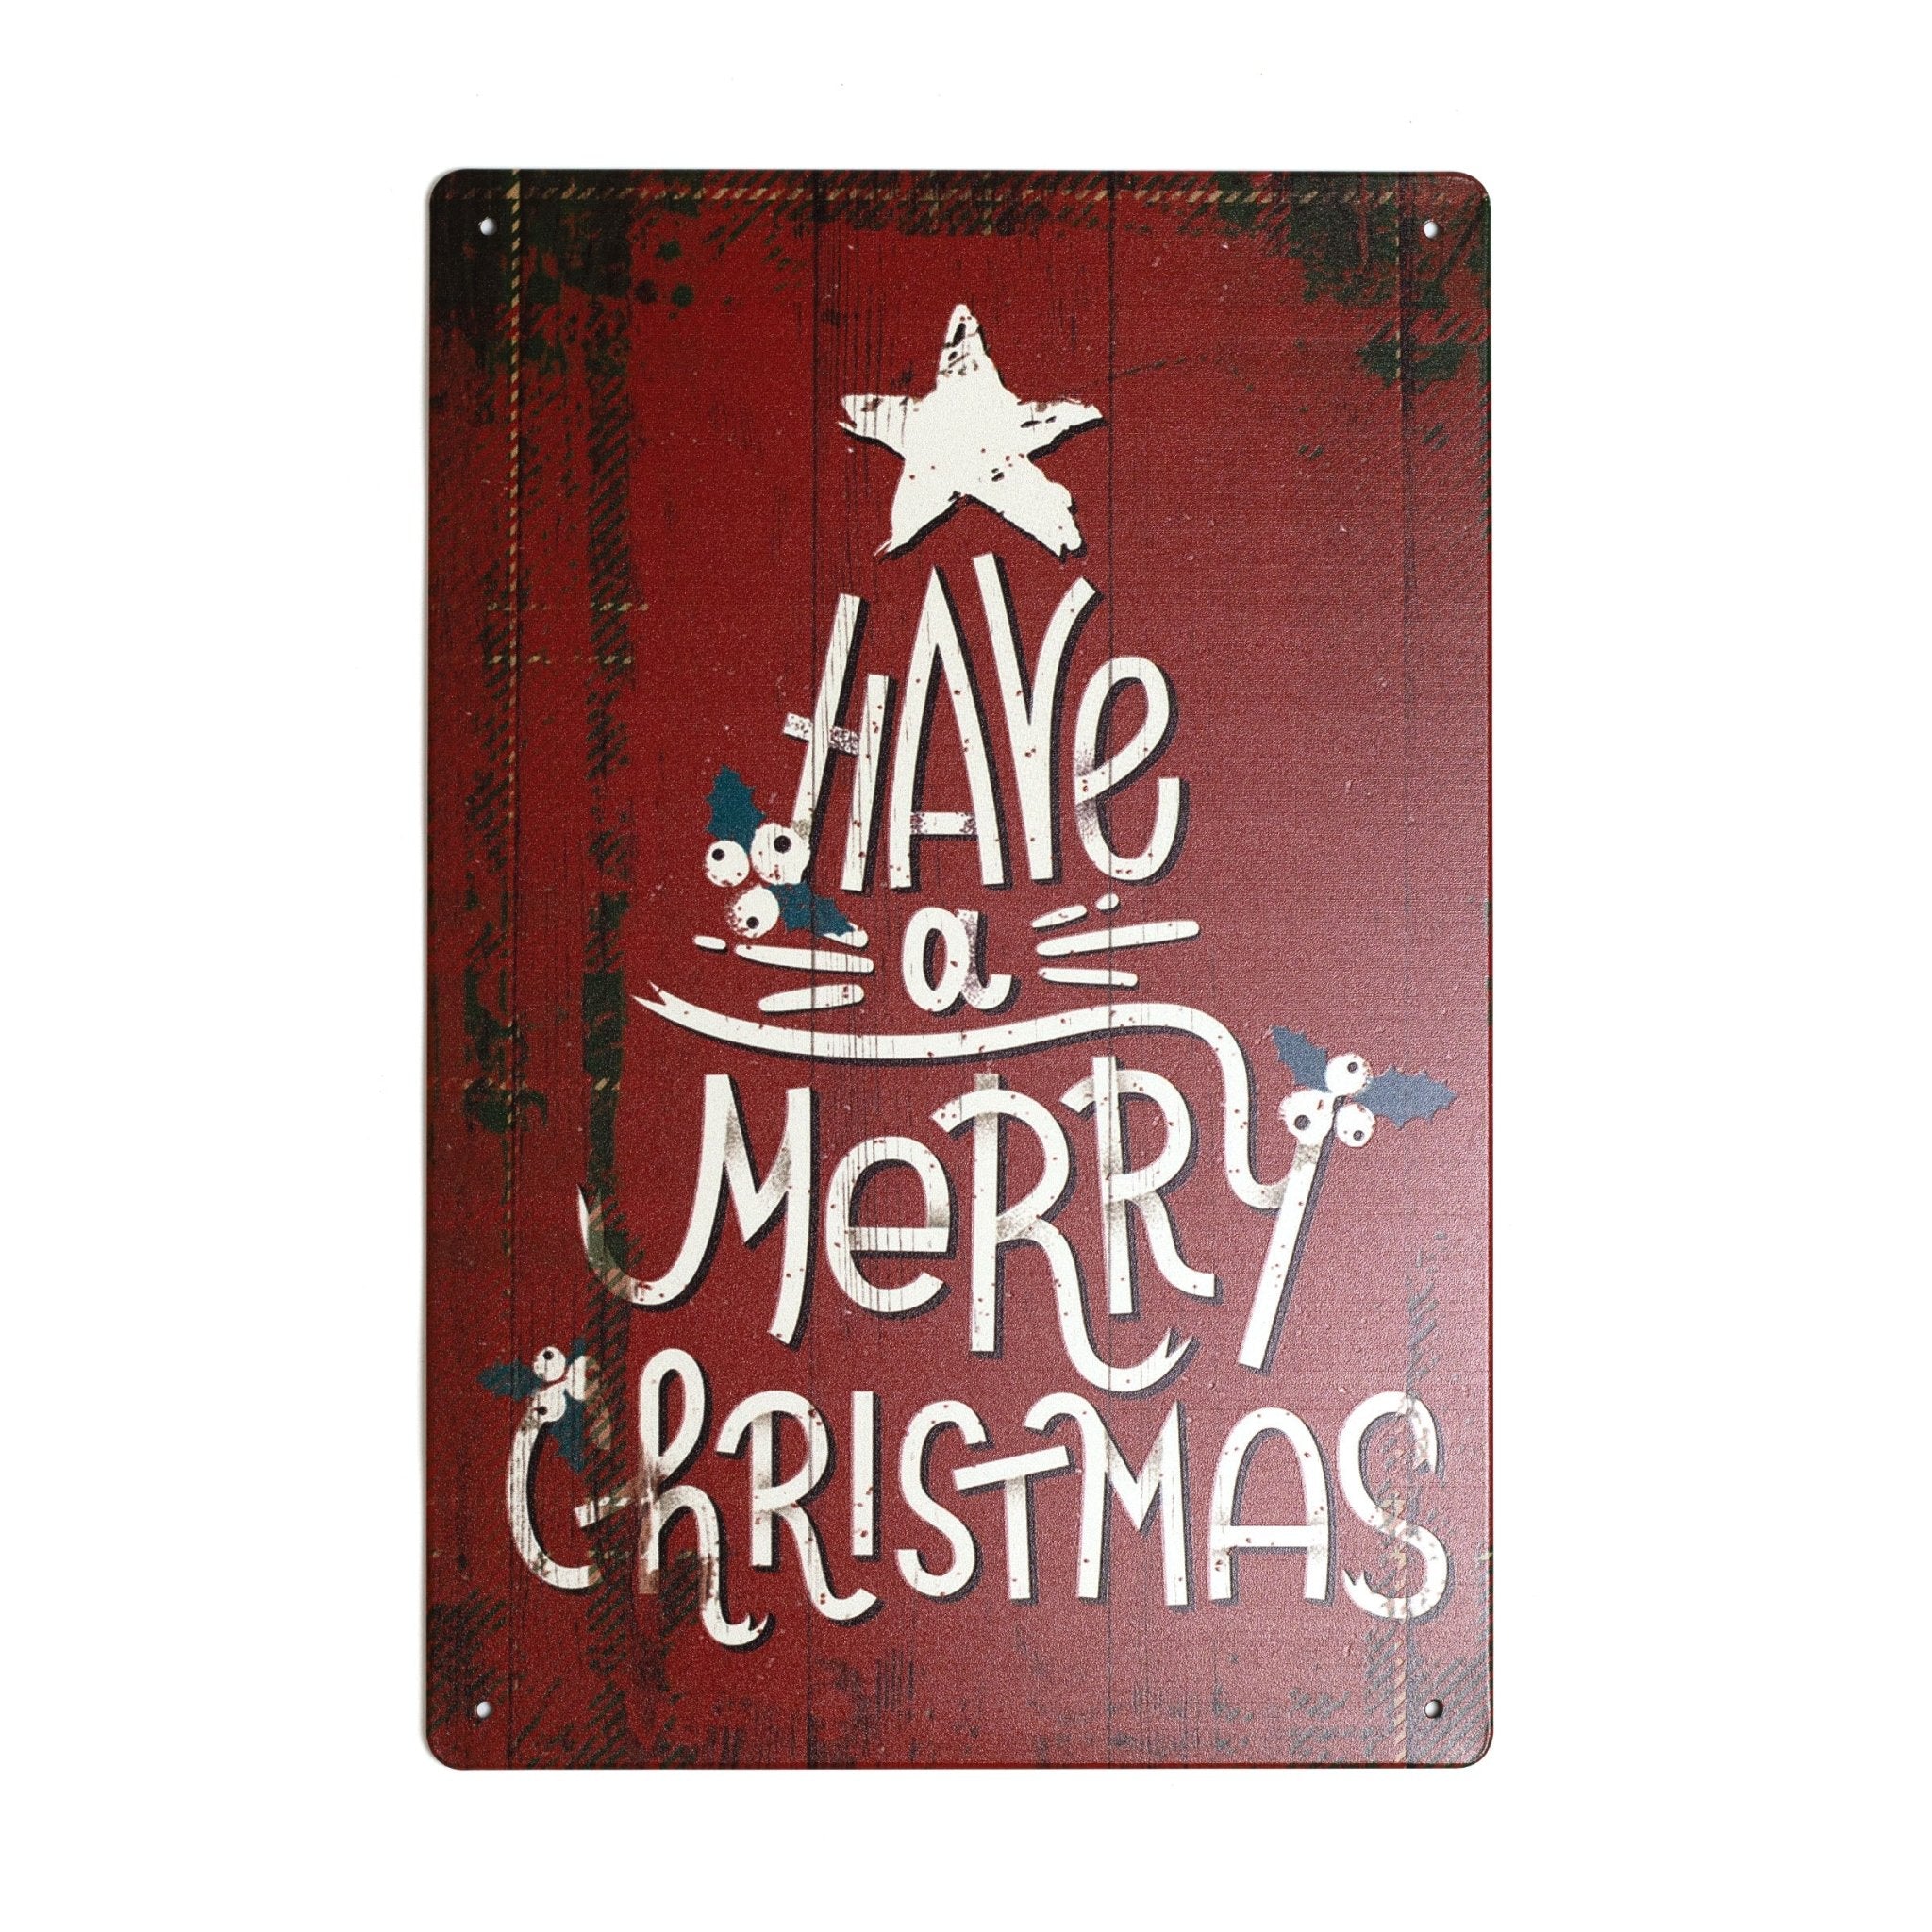 Have a Merry Christmas Metal Sign 20x30cm 2030003 - MODA FLORA Santa's Workshop